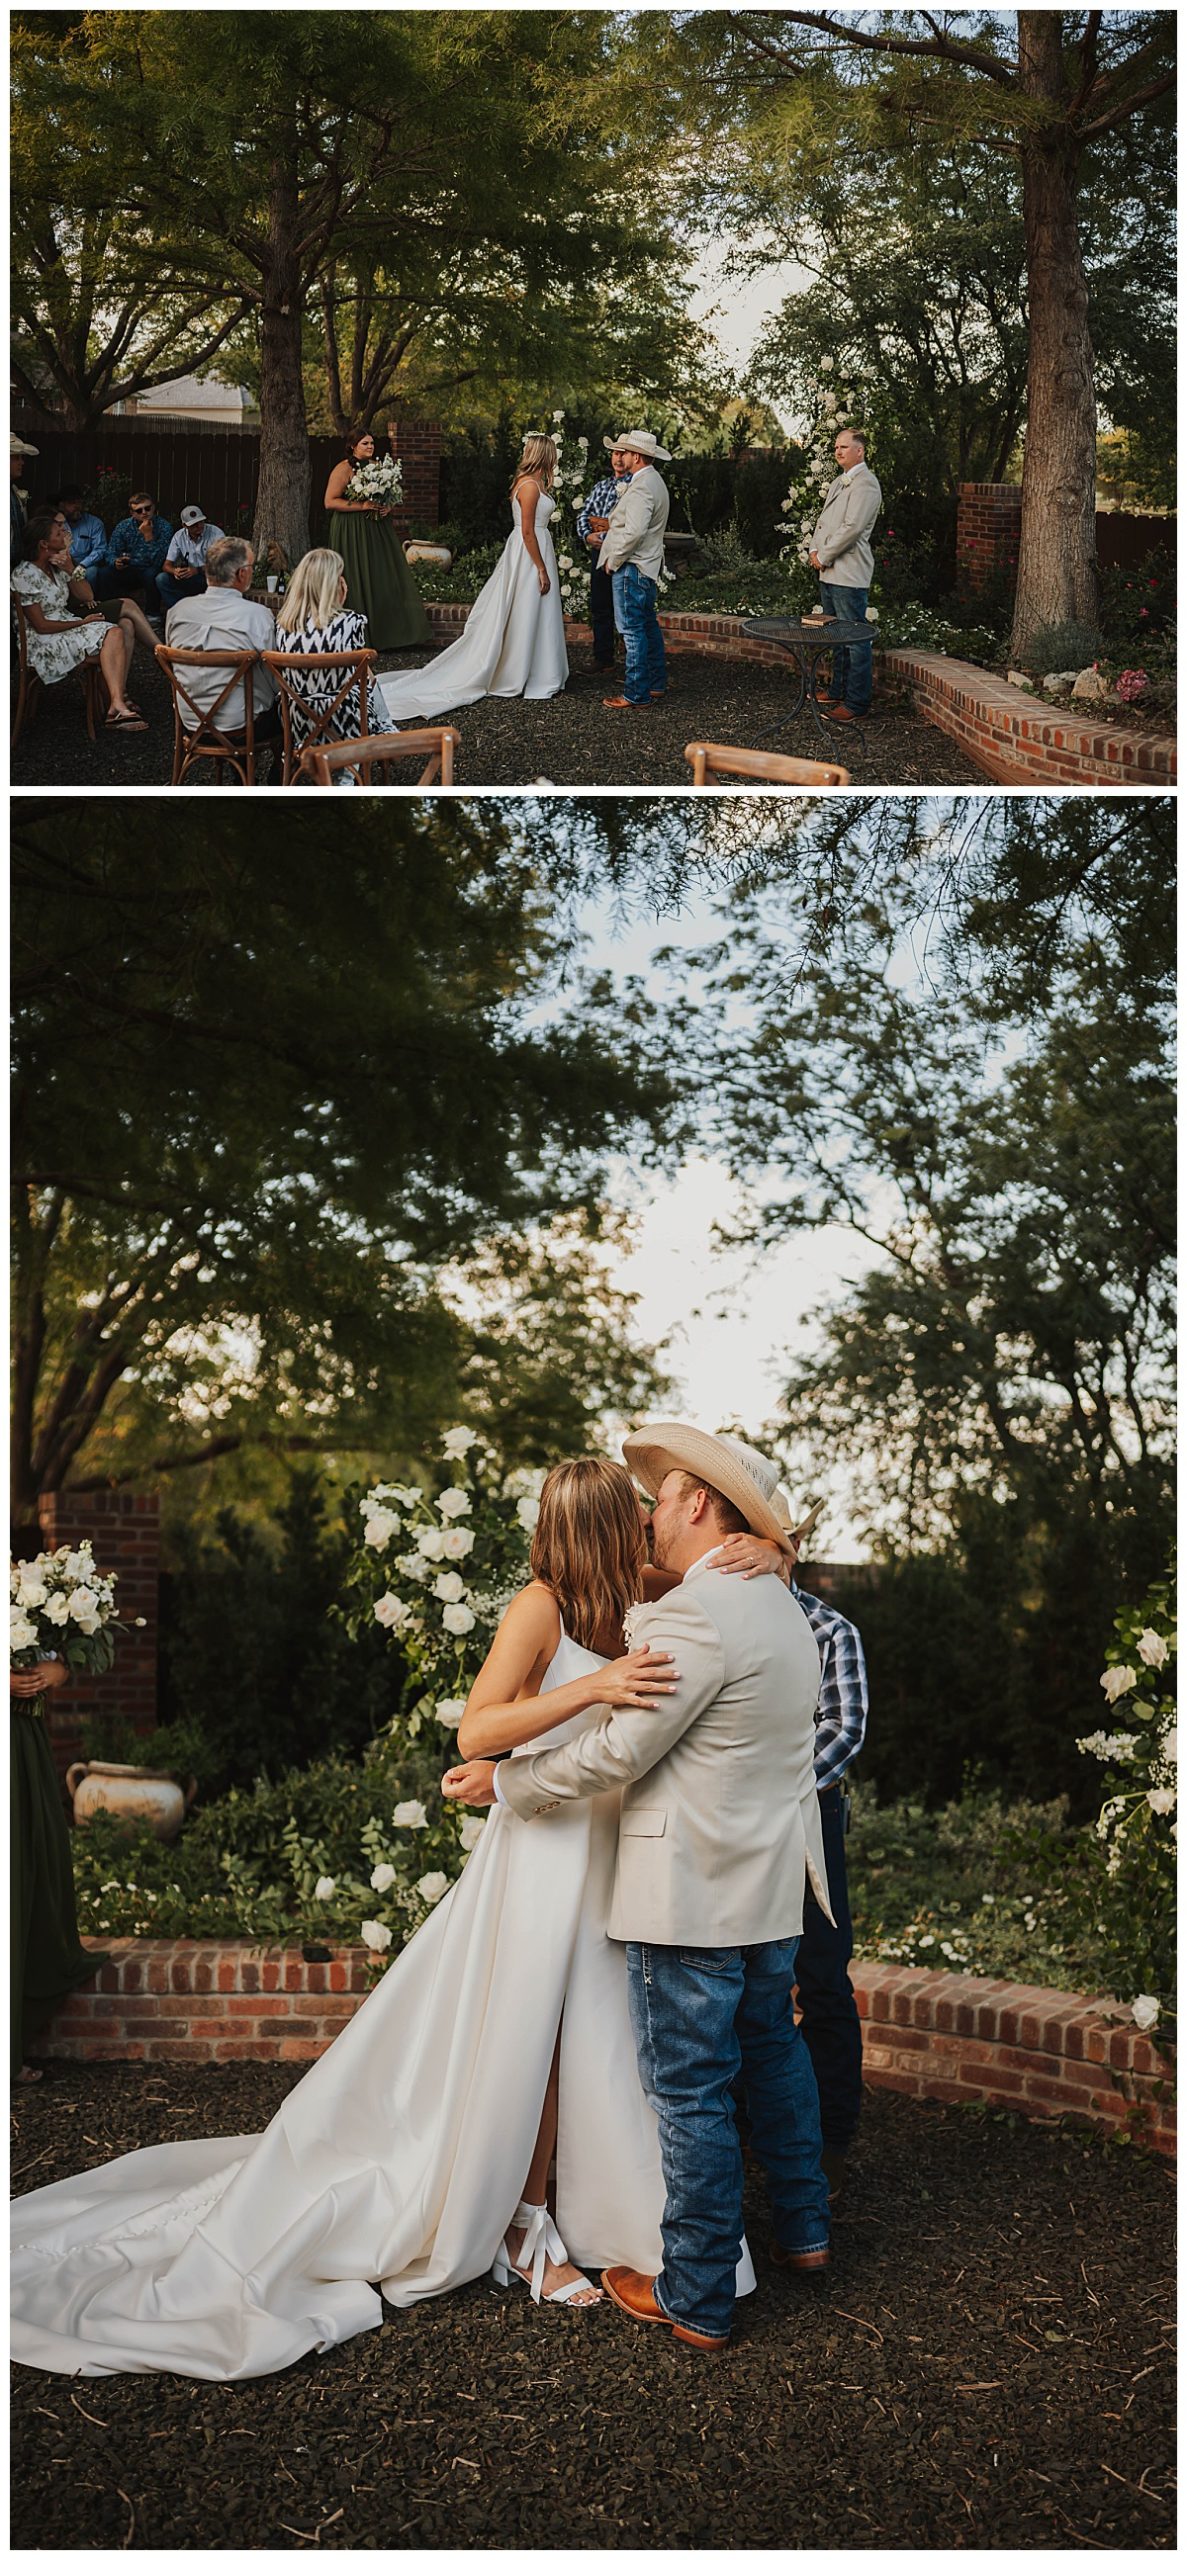 Bride and groom share kiss at intimate backyard wedding 